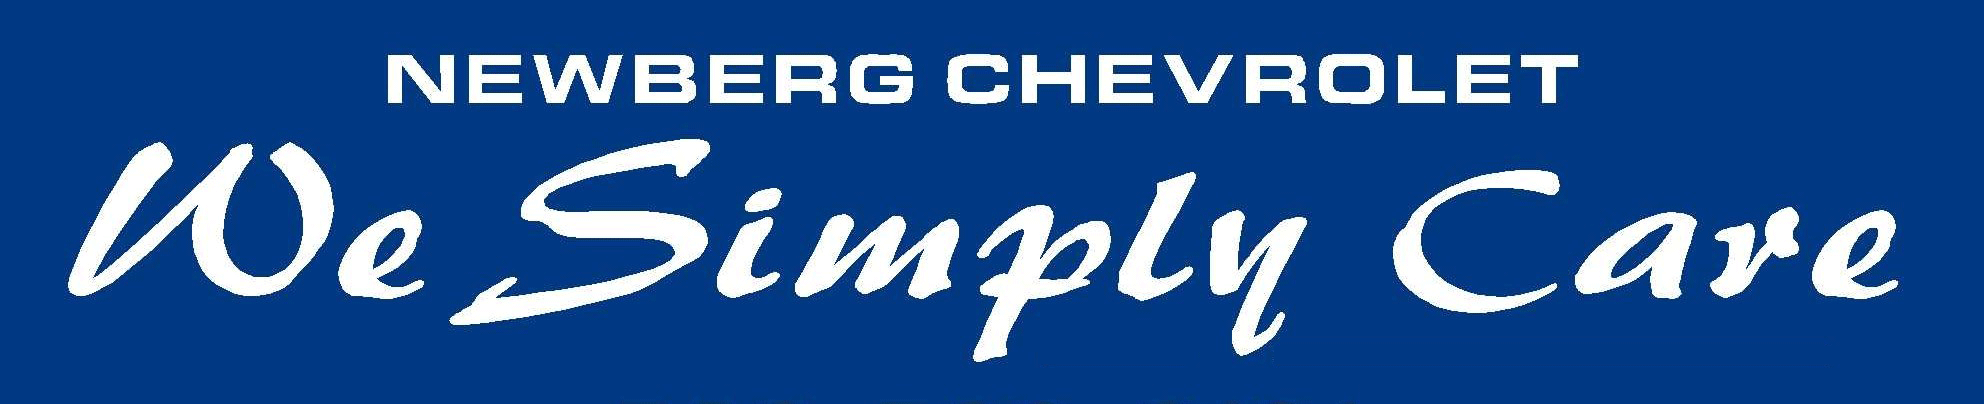 Newberg Chevrolet